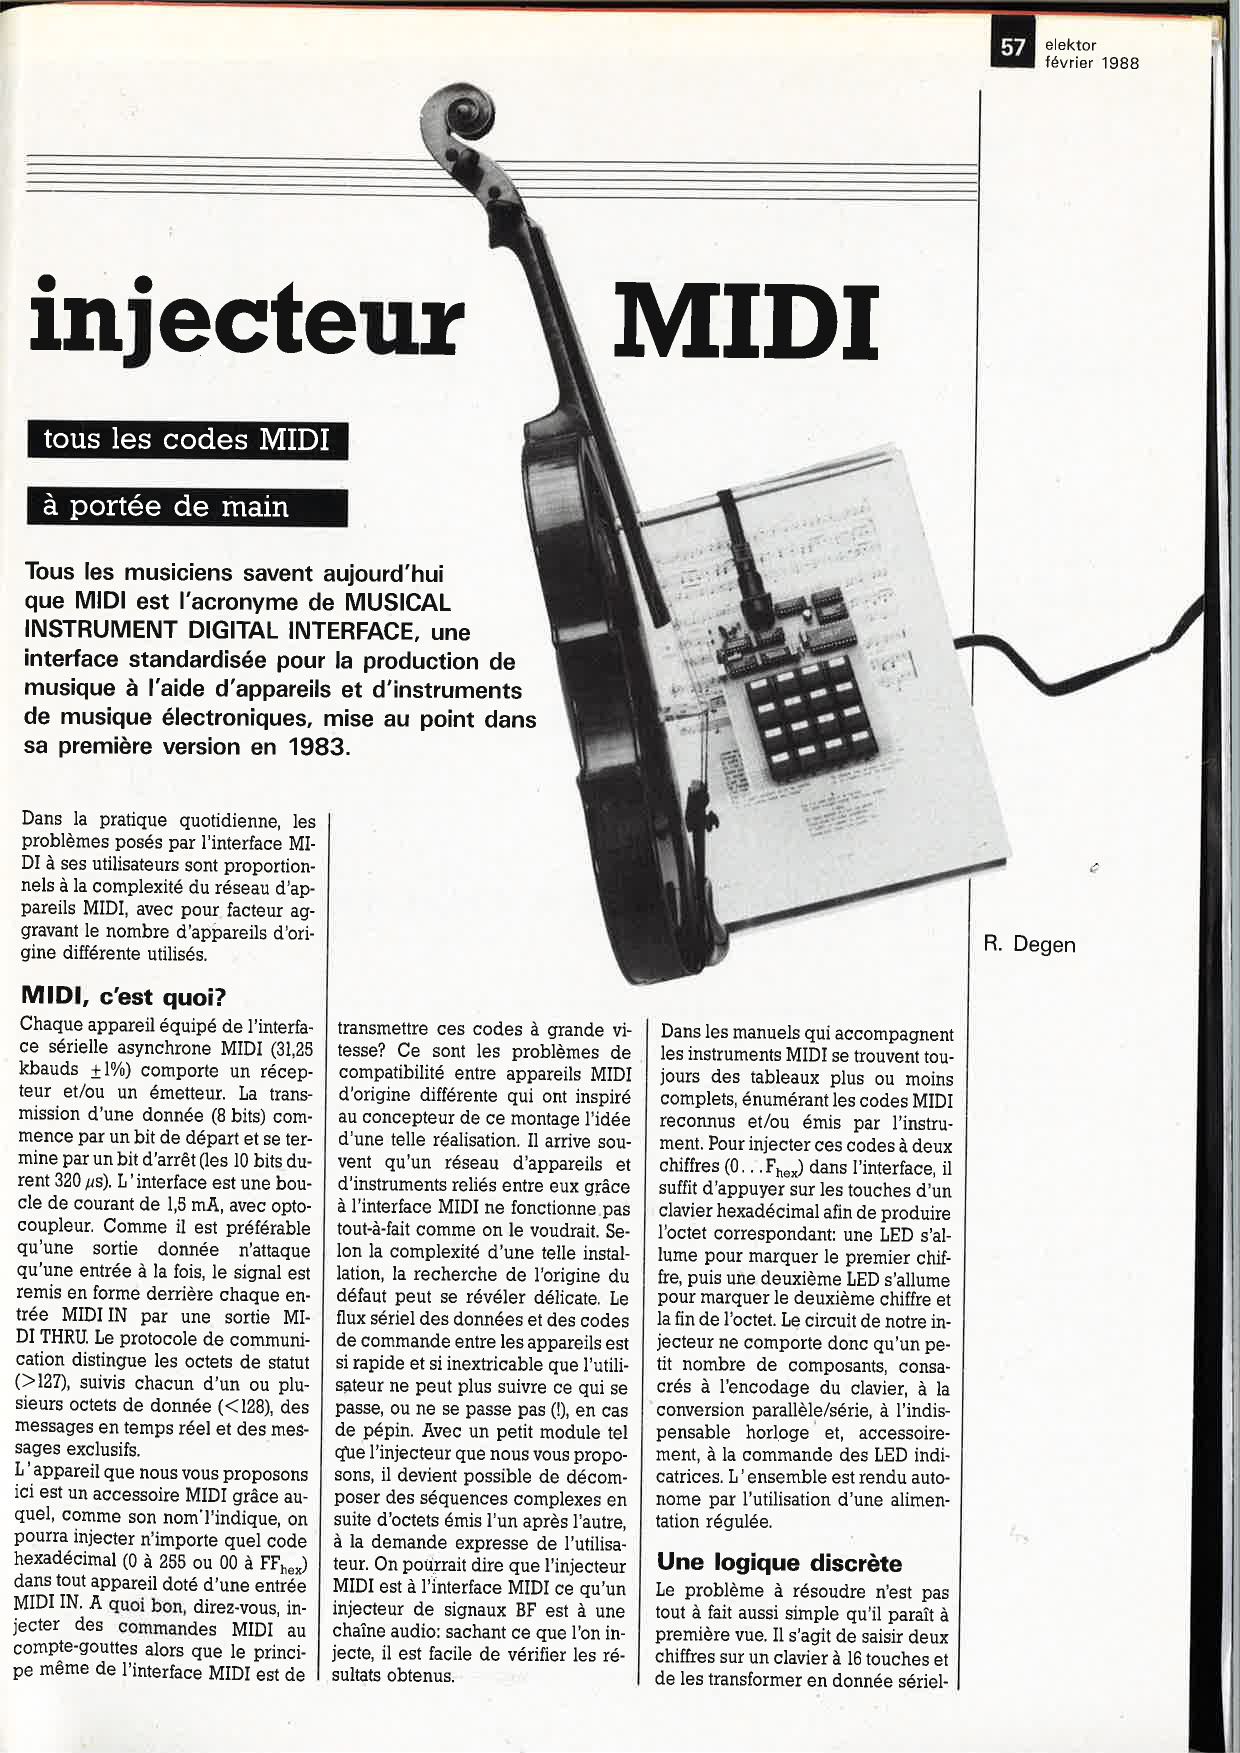 injecteur MIDI